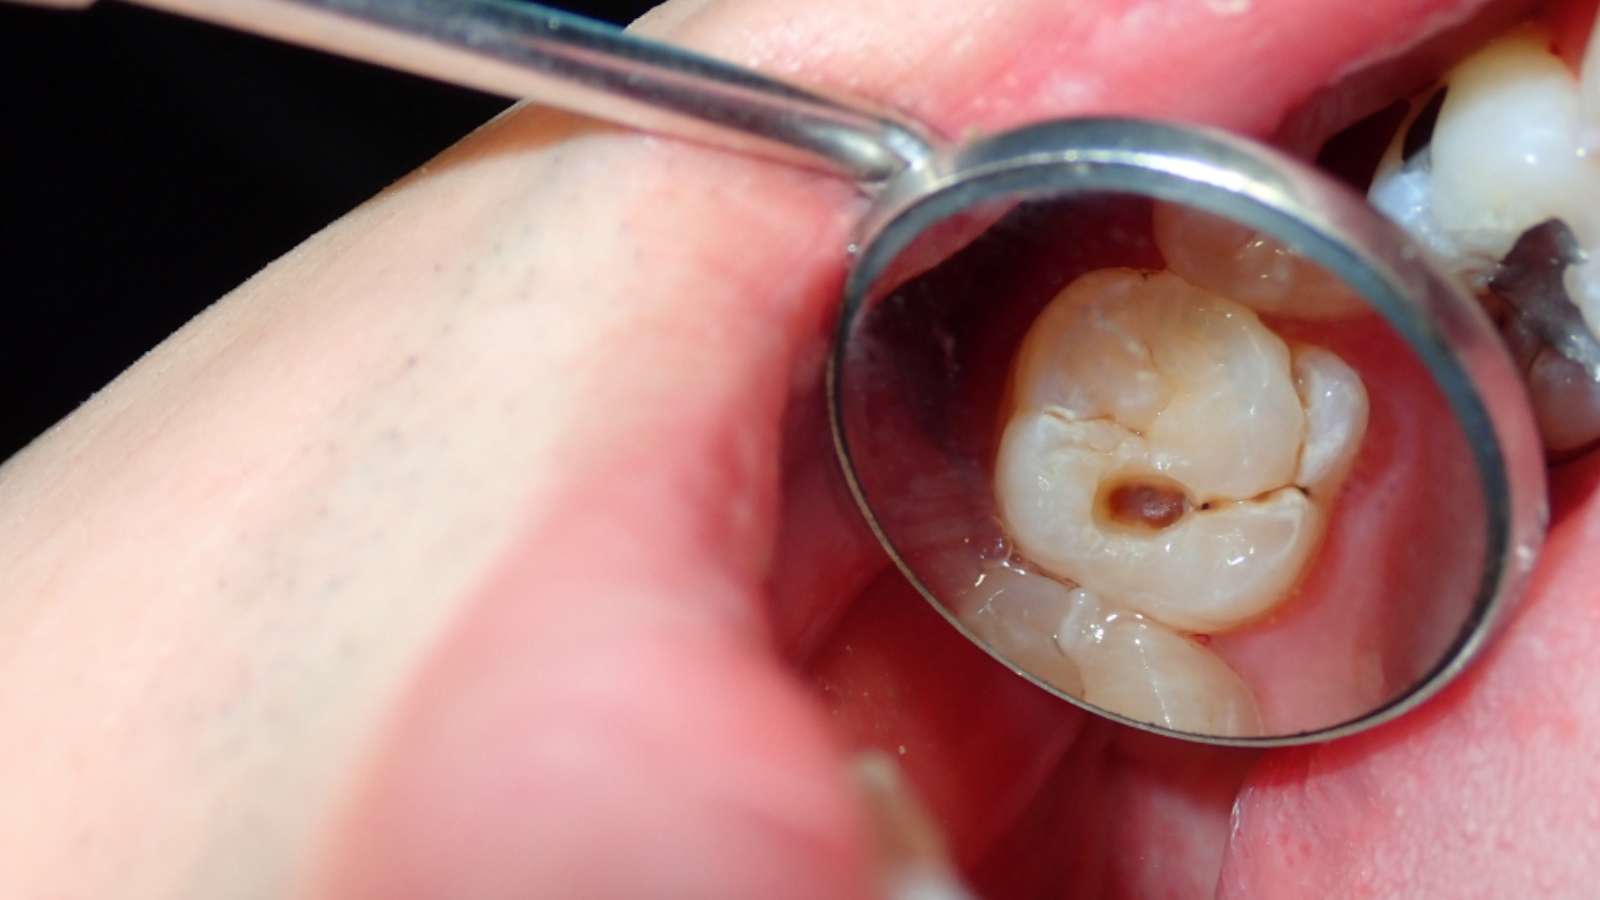 types of cavities - class 1 cavity